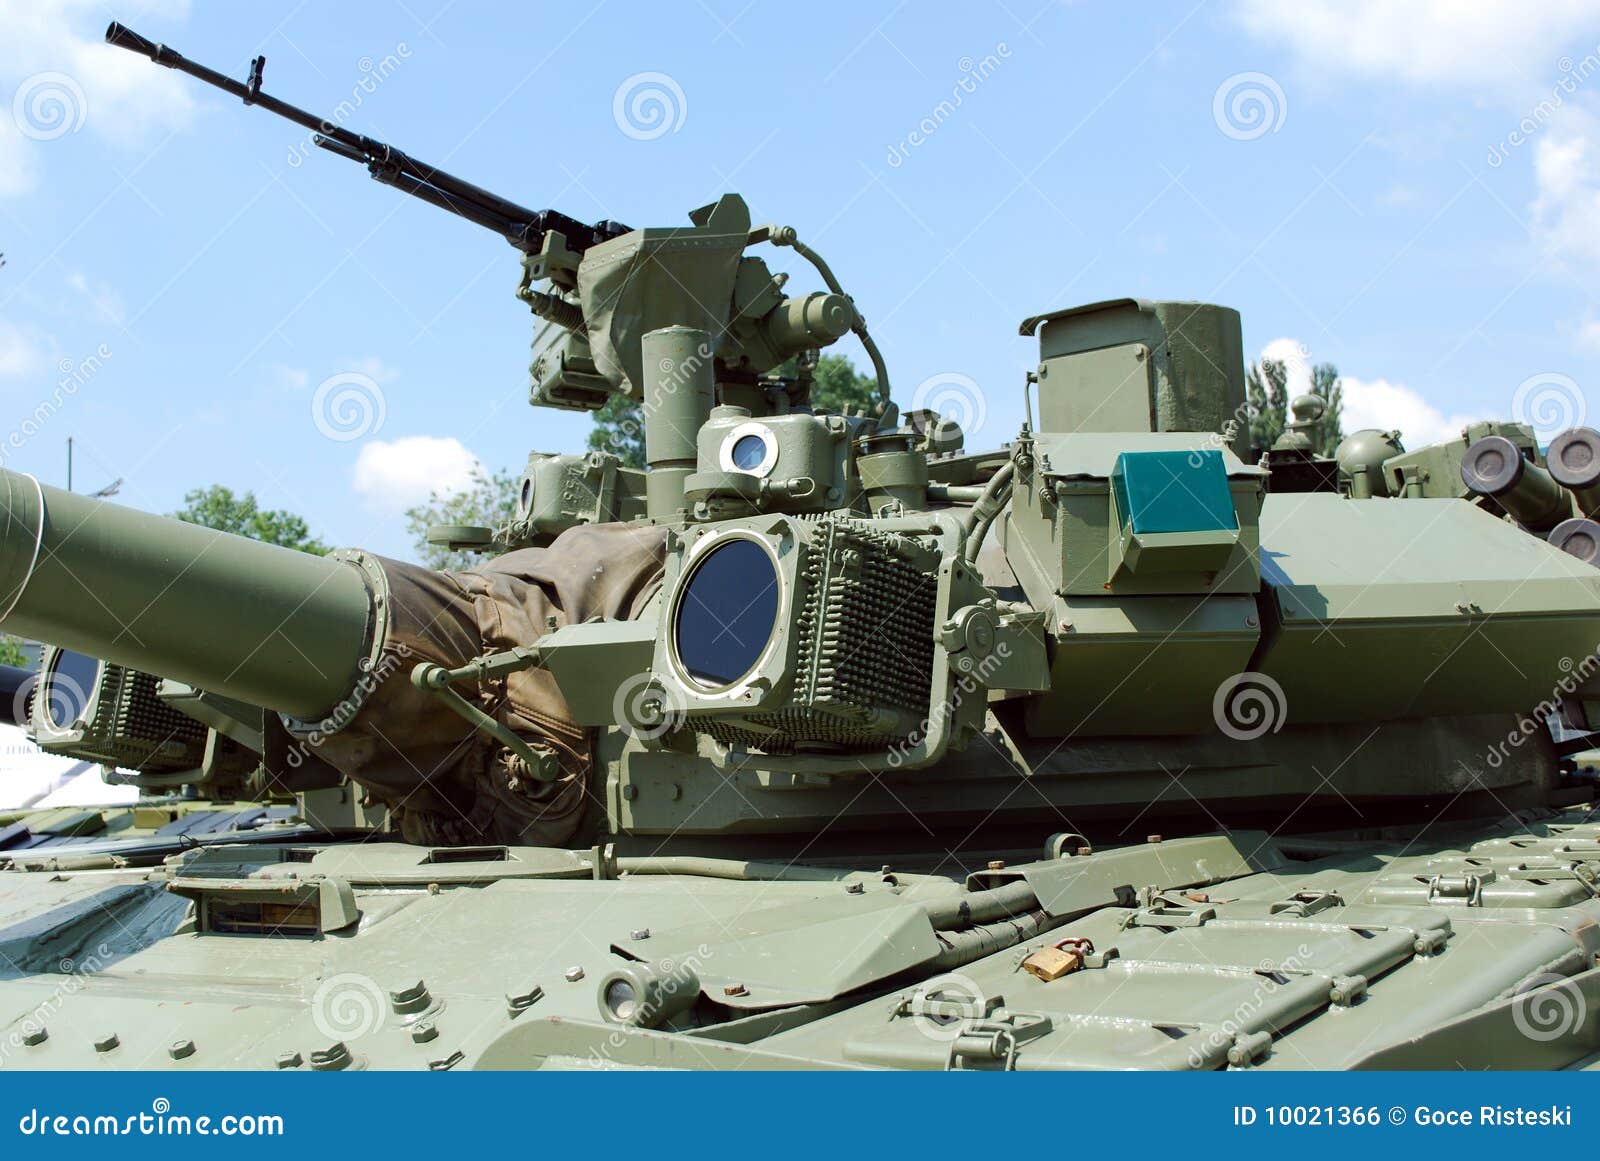 Tank turret